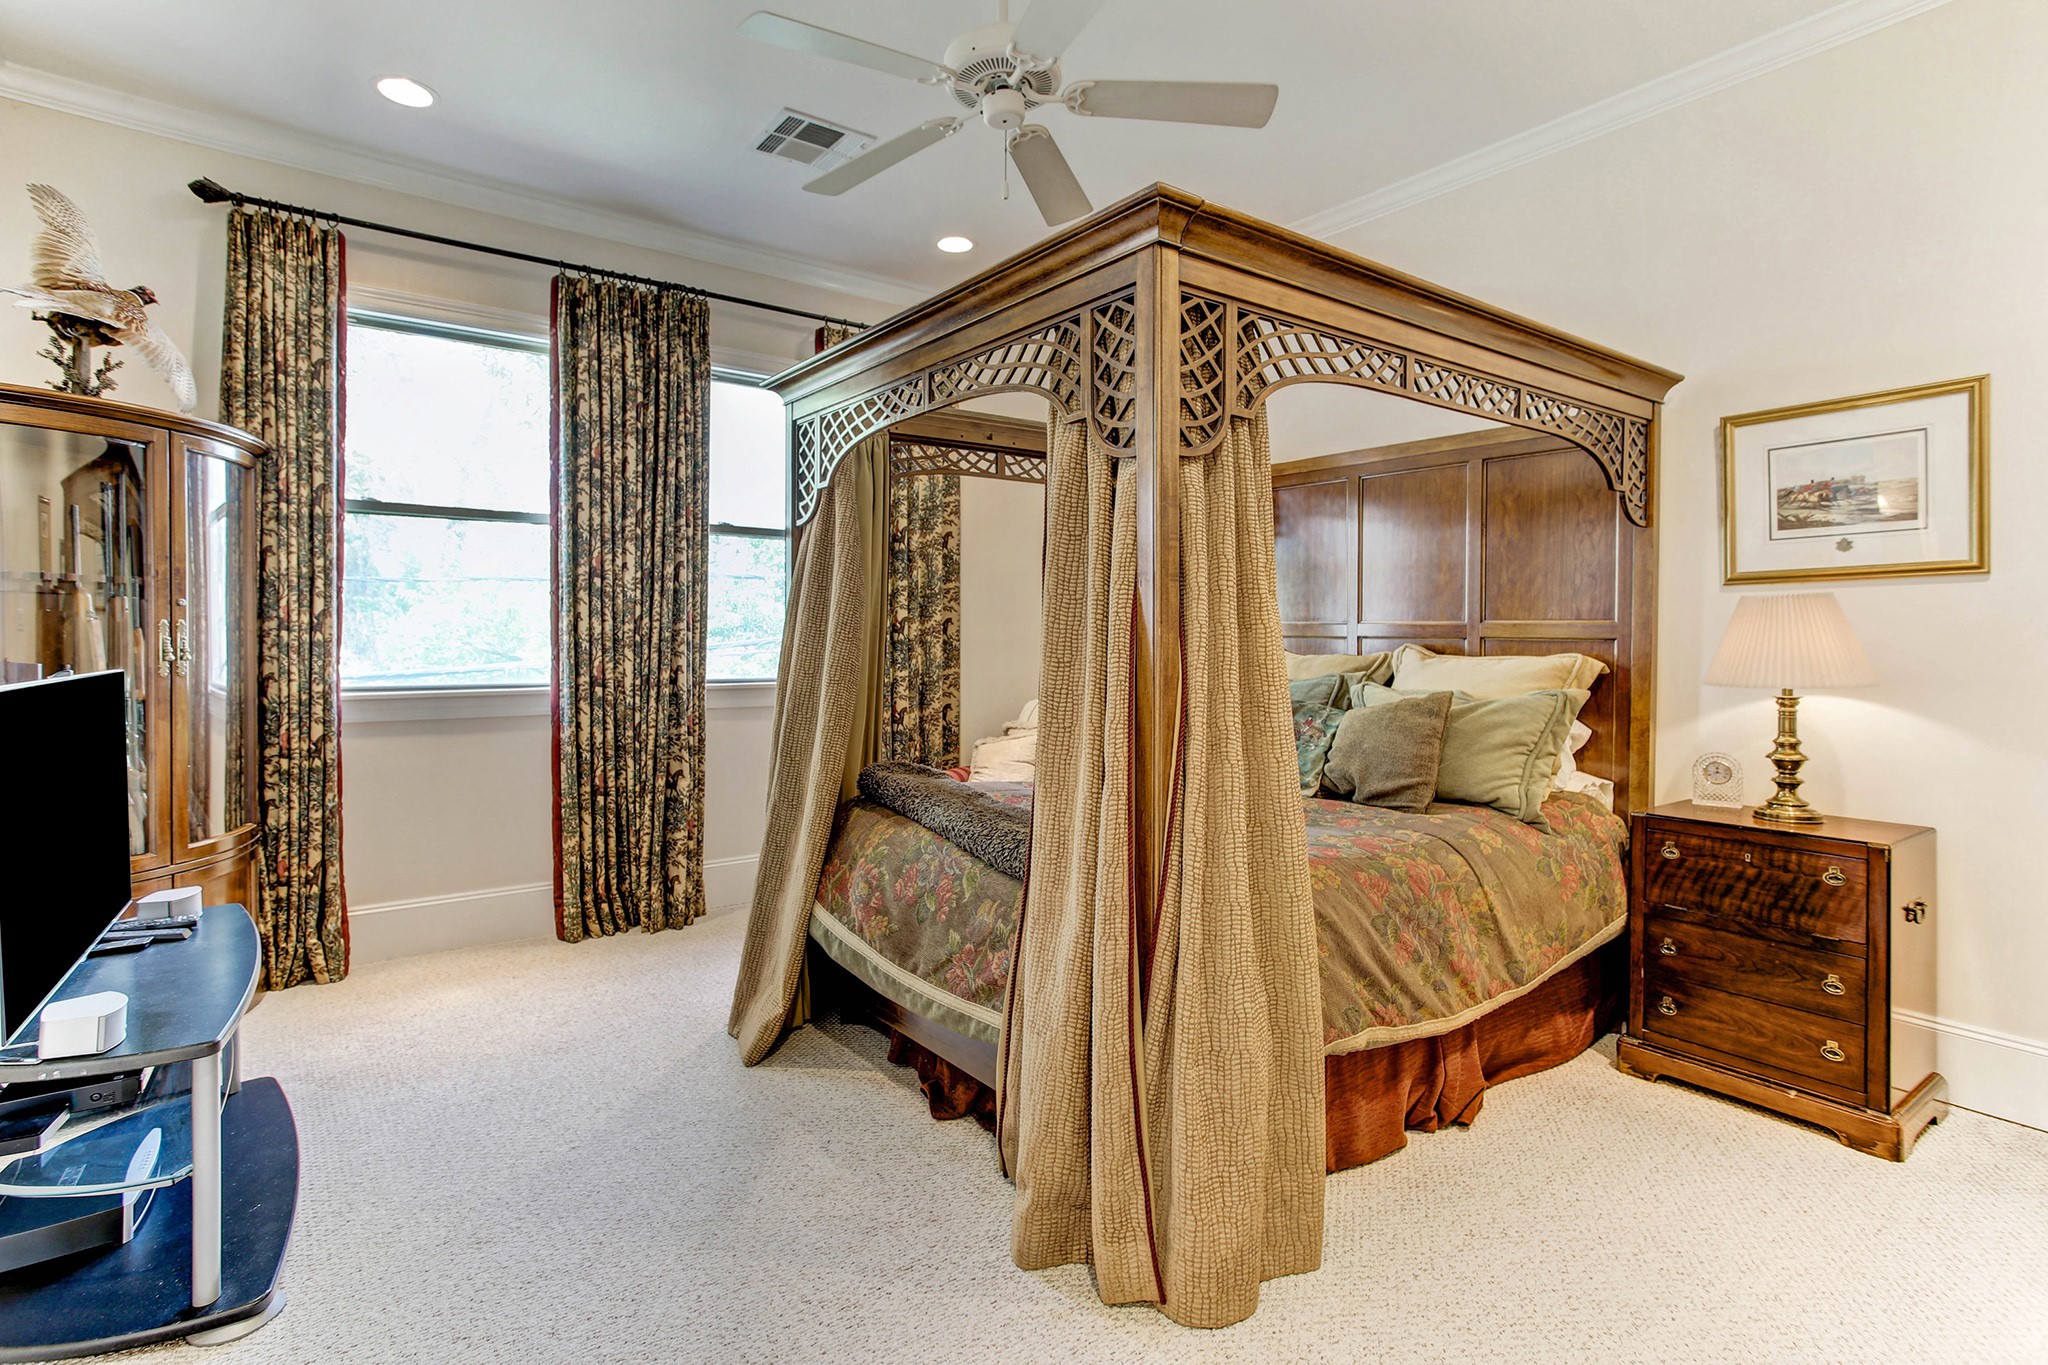 Generous sized secondary bedroom with en-suite bath.